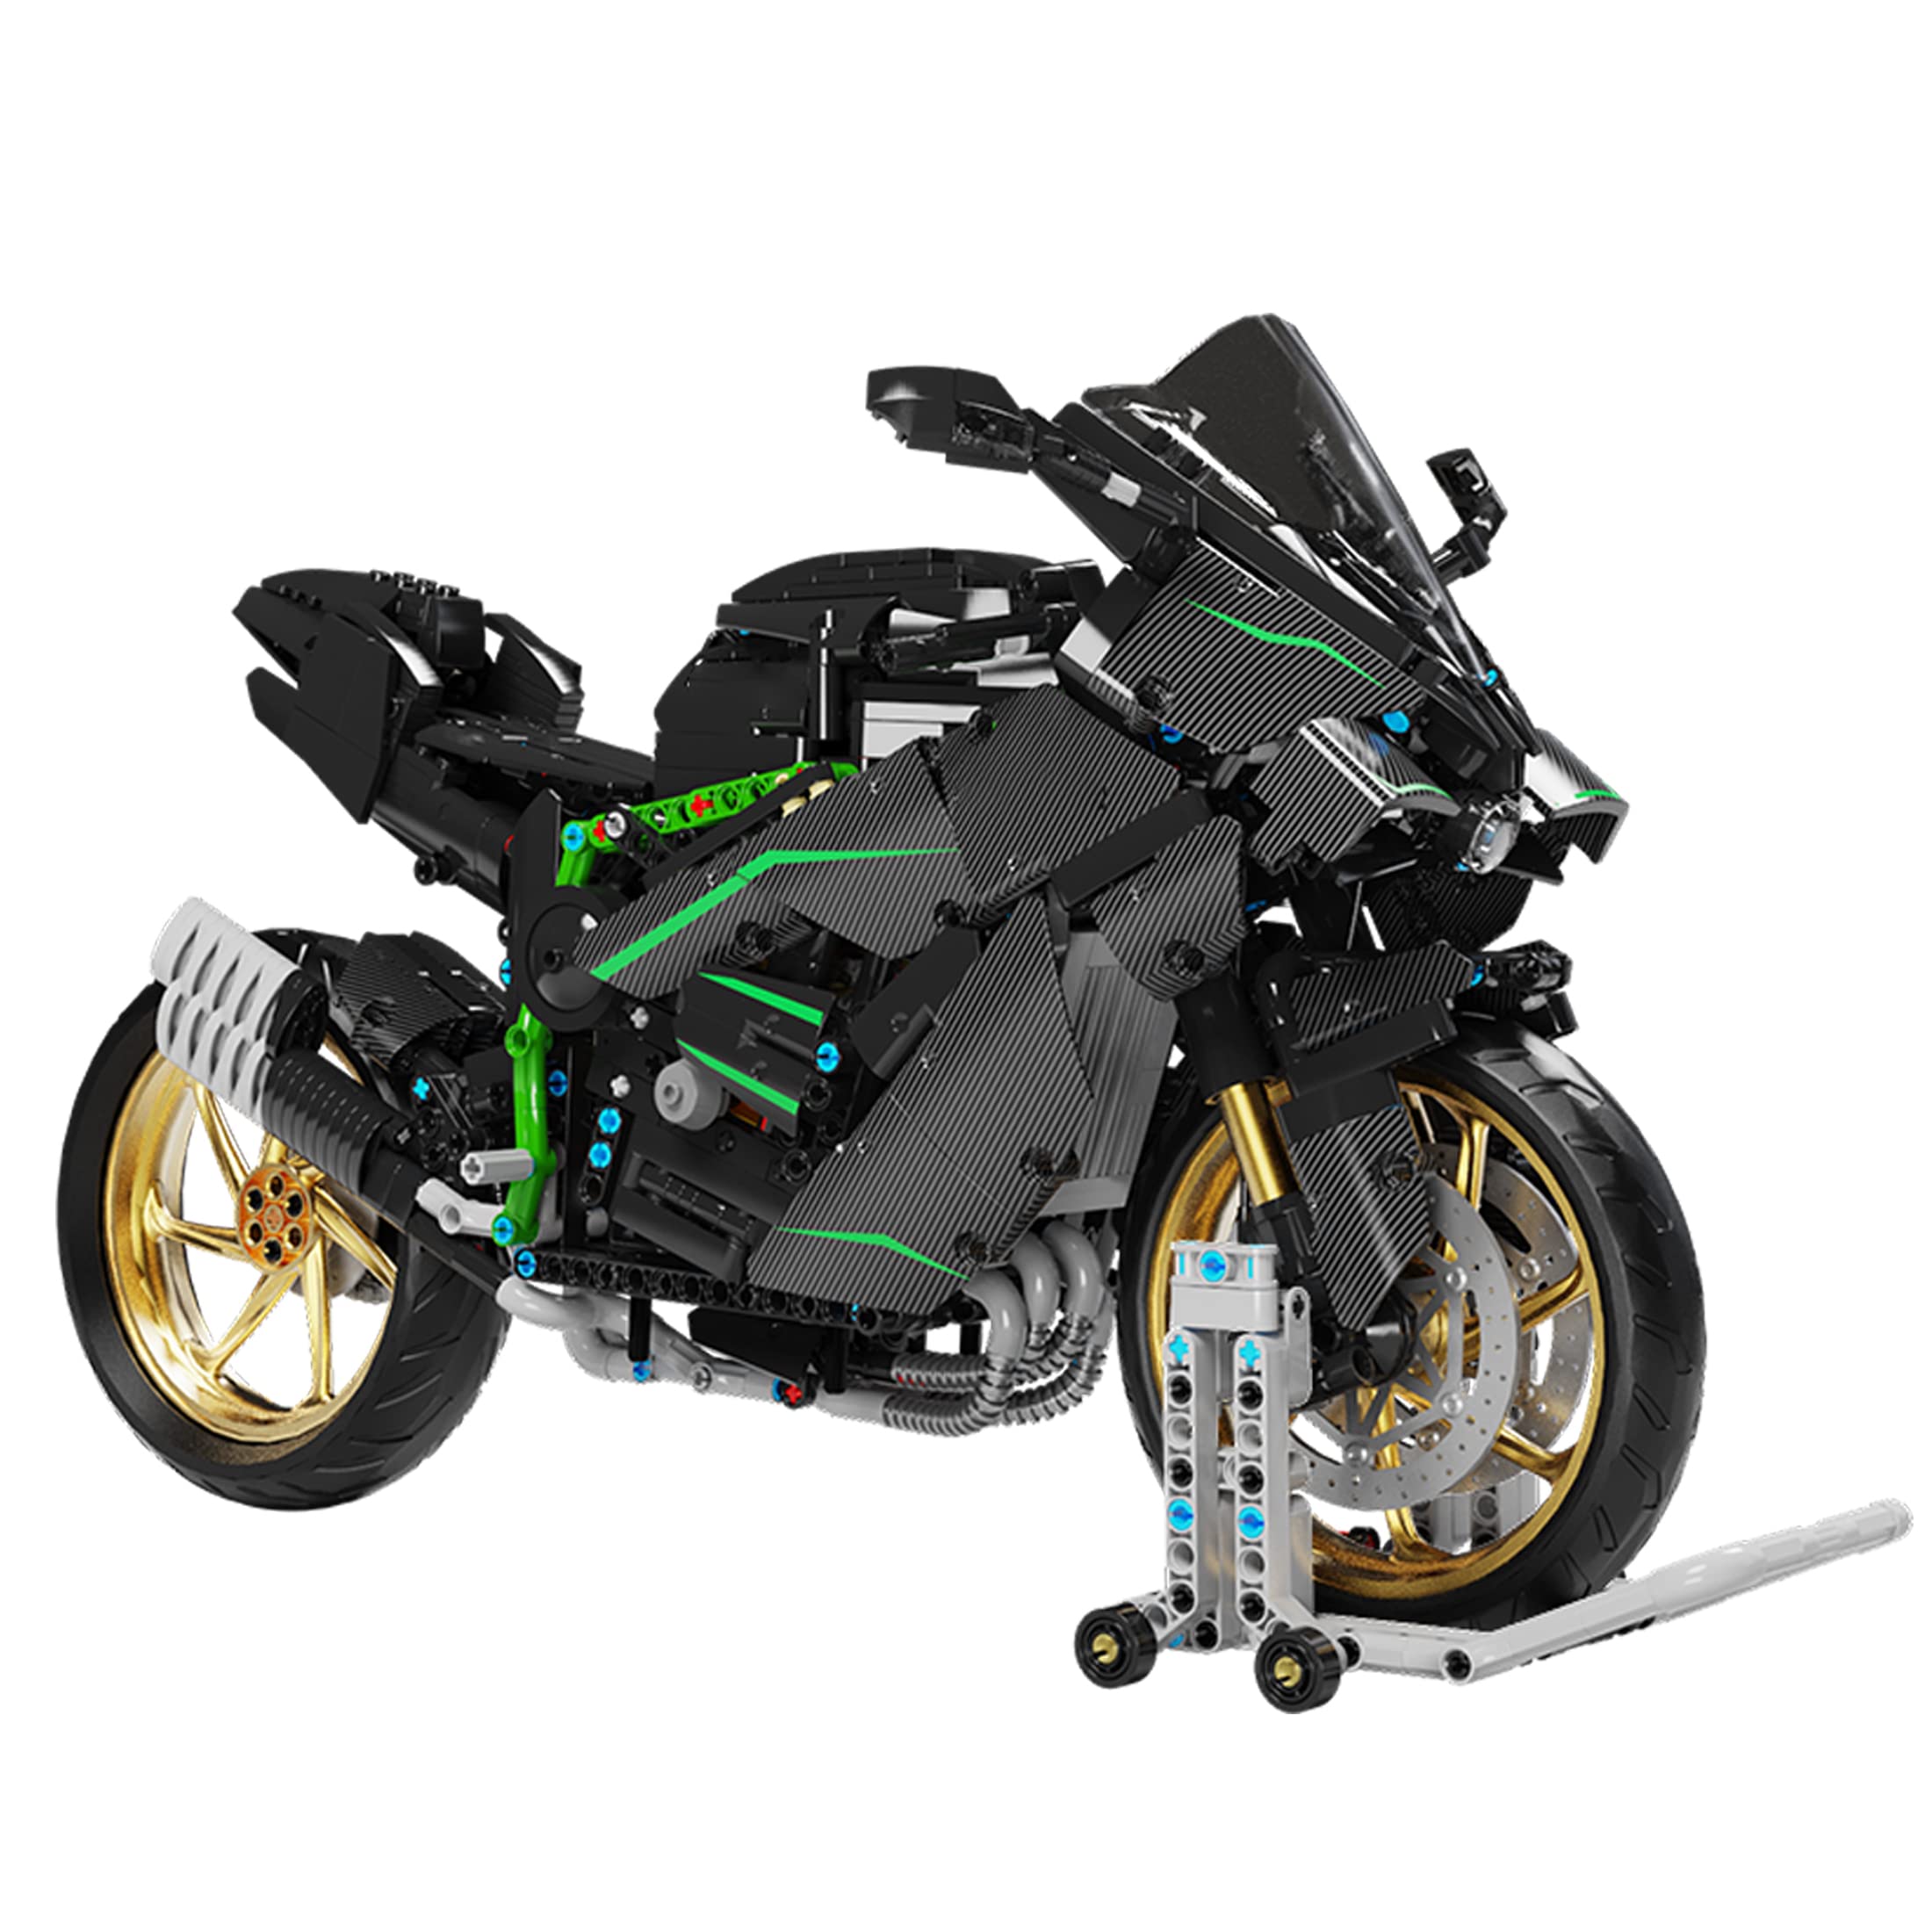 Audio technics motorcycle for lego kawasaki hr